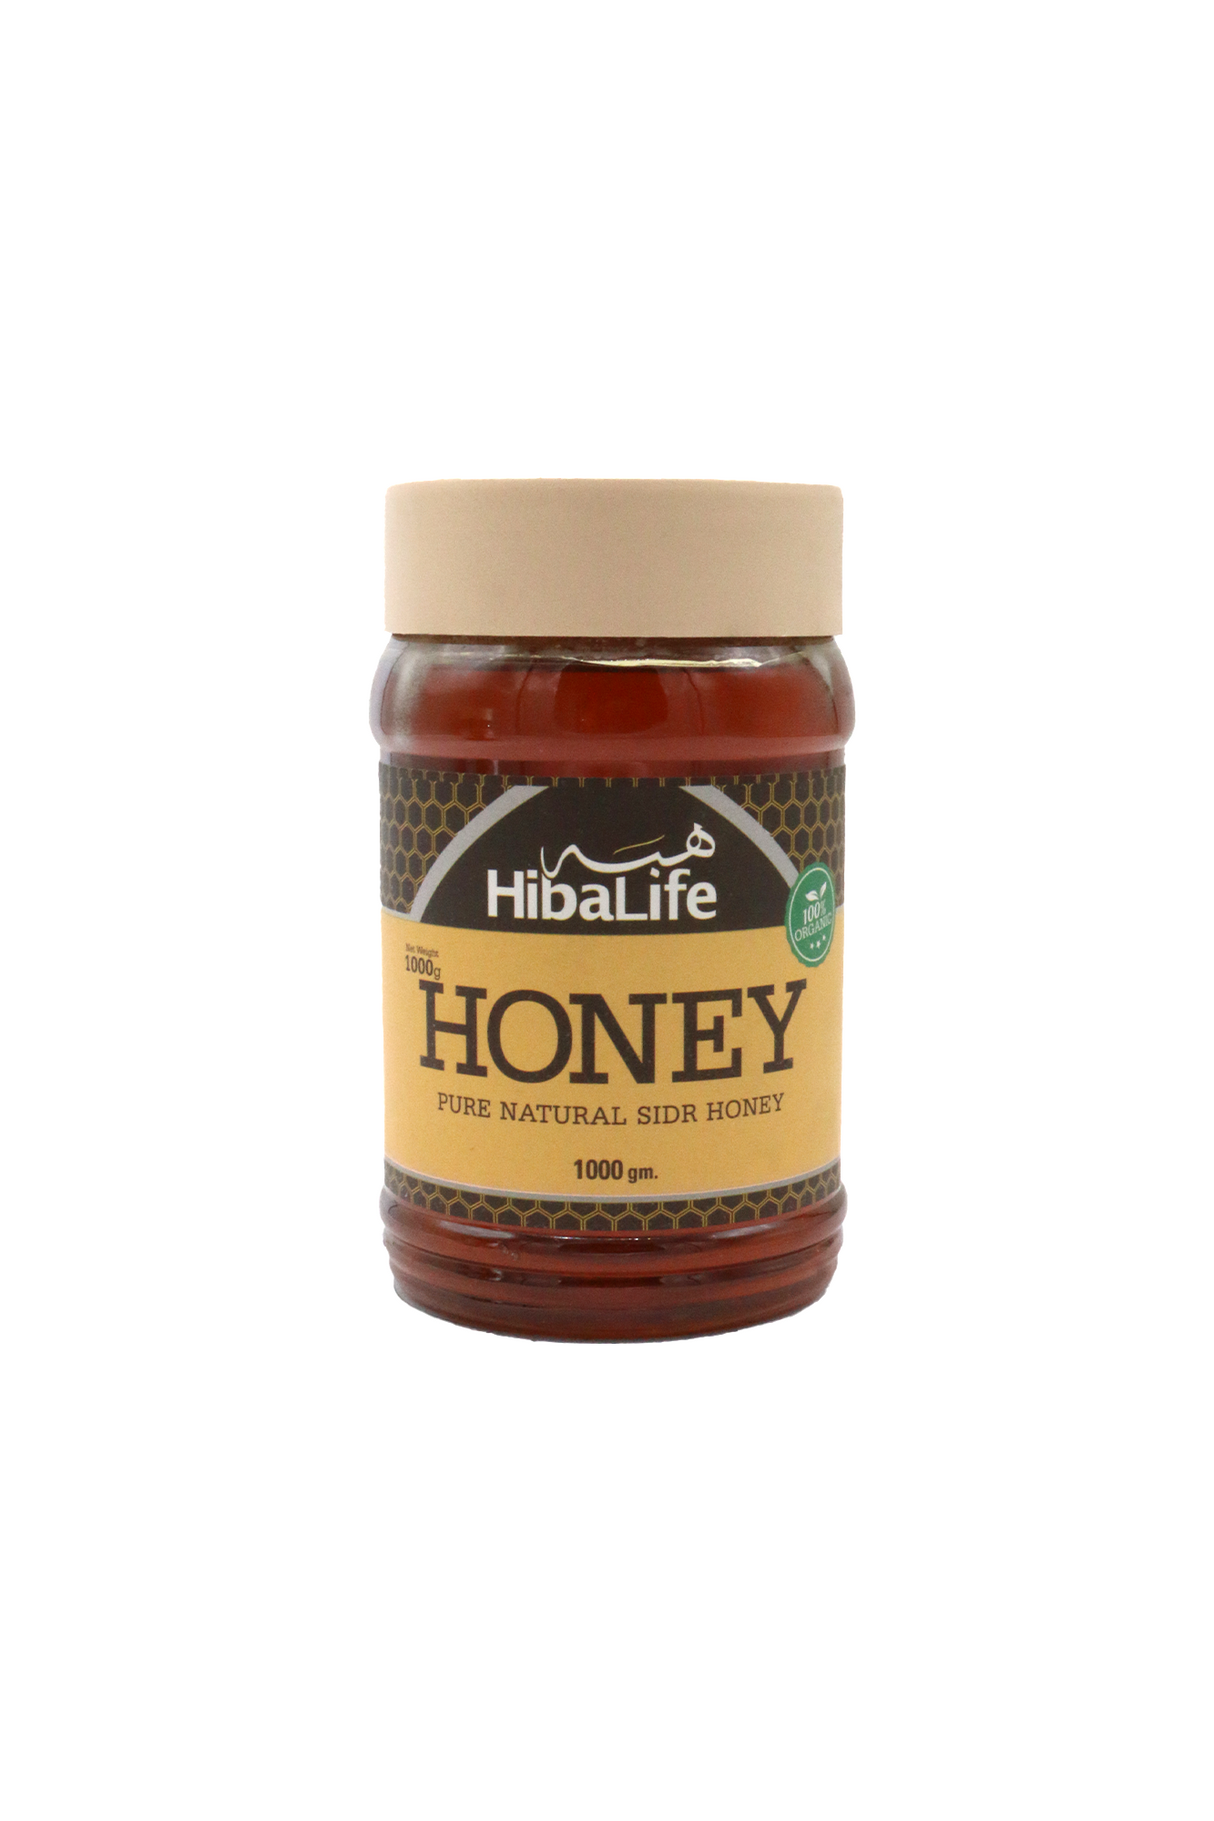 hiba life honey sidr 1kg